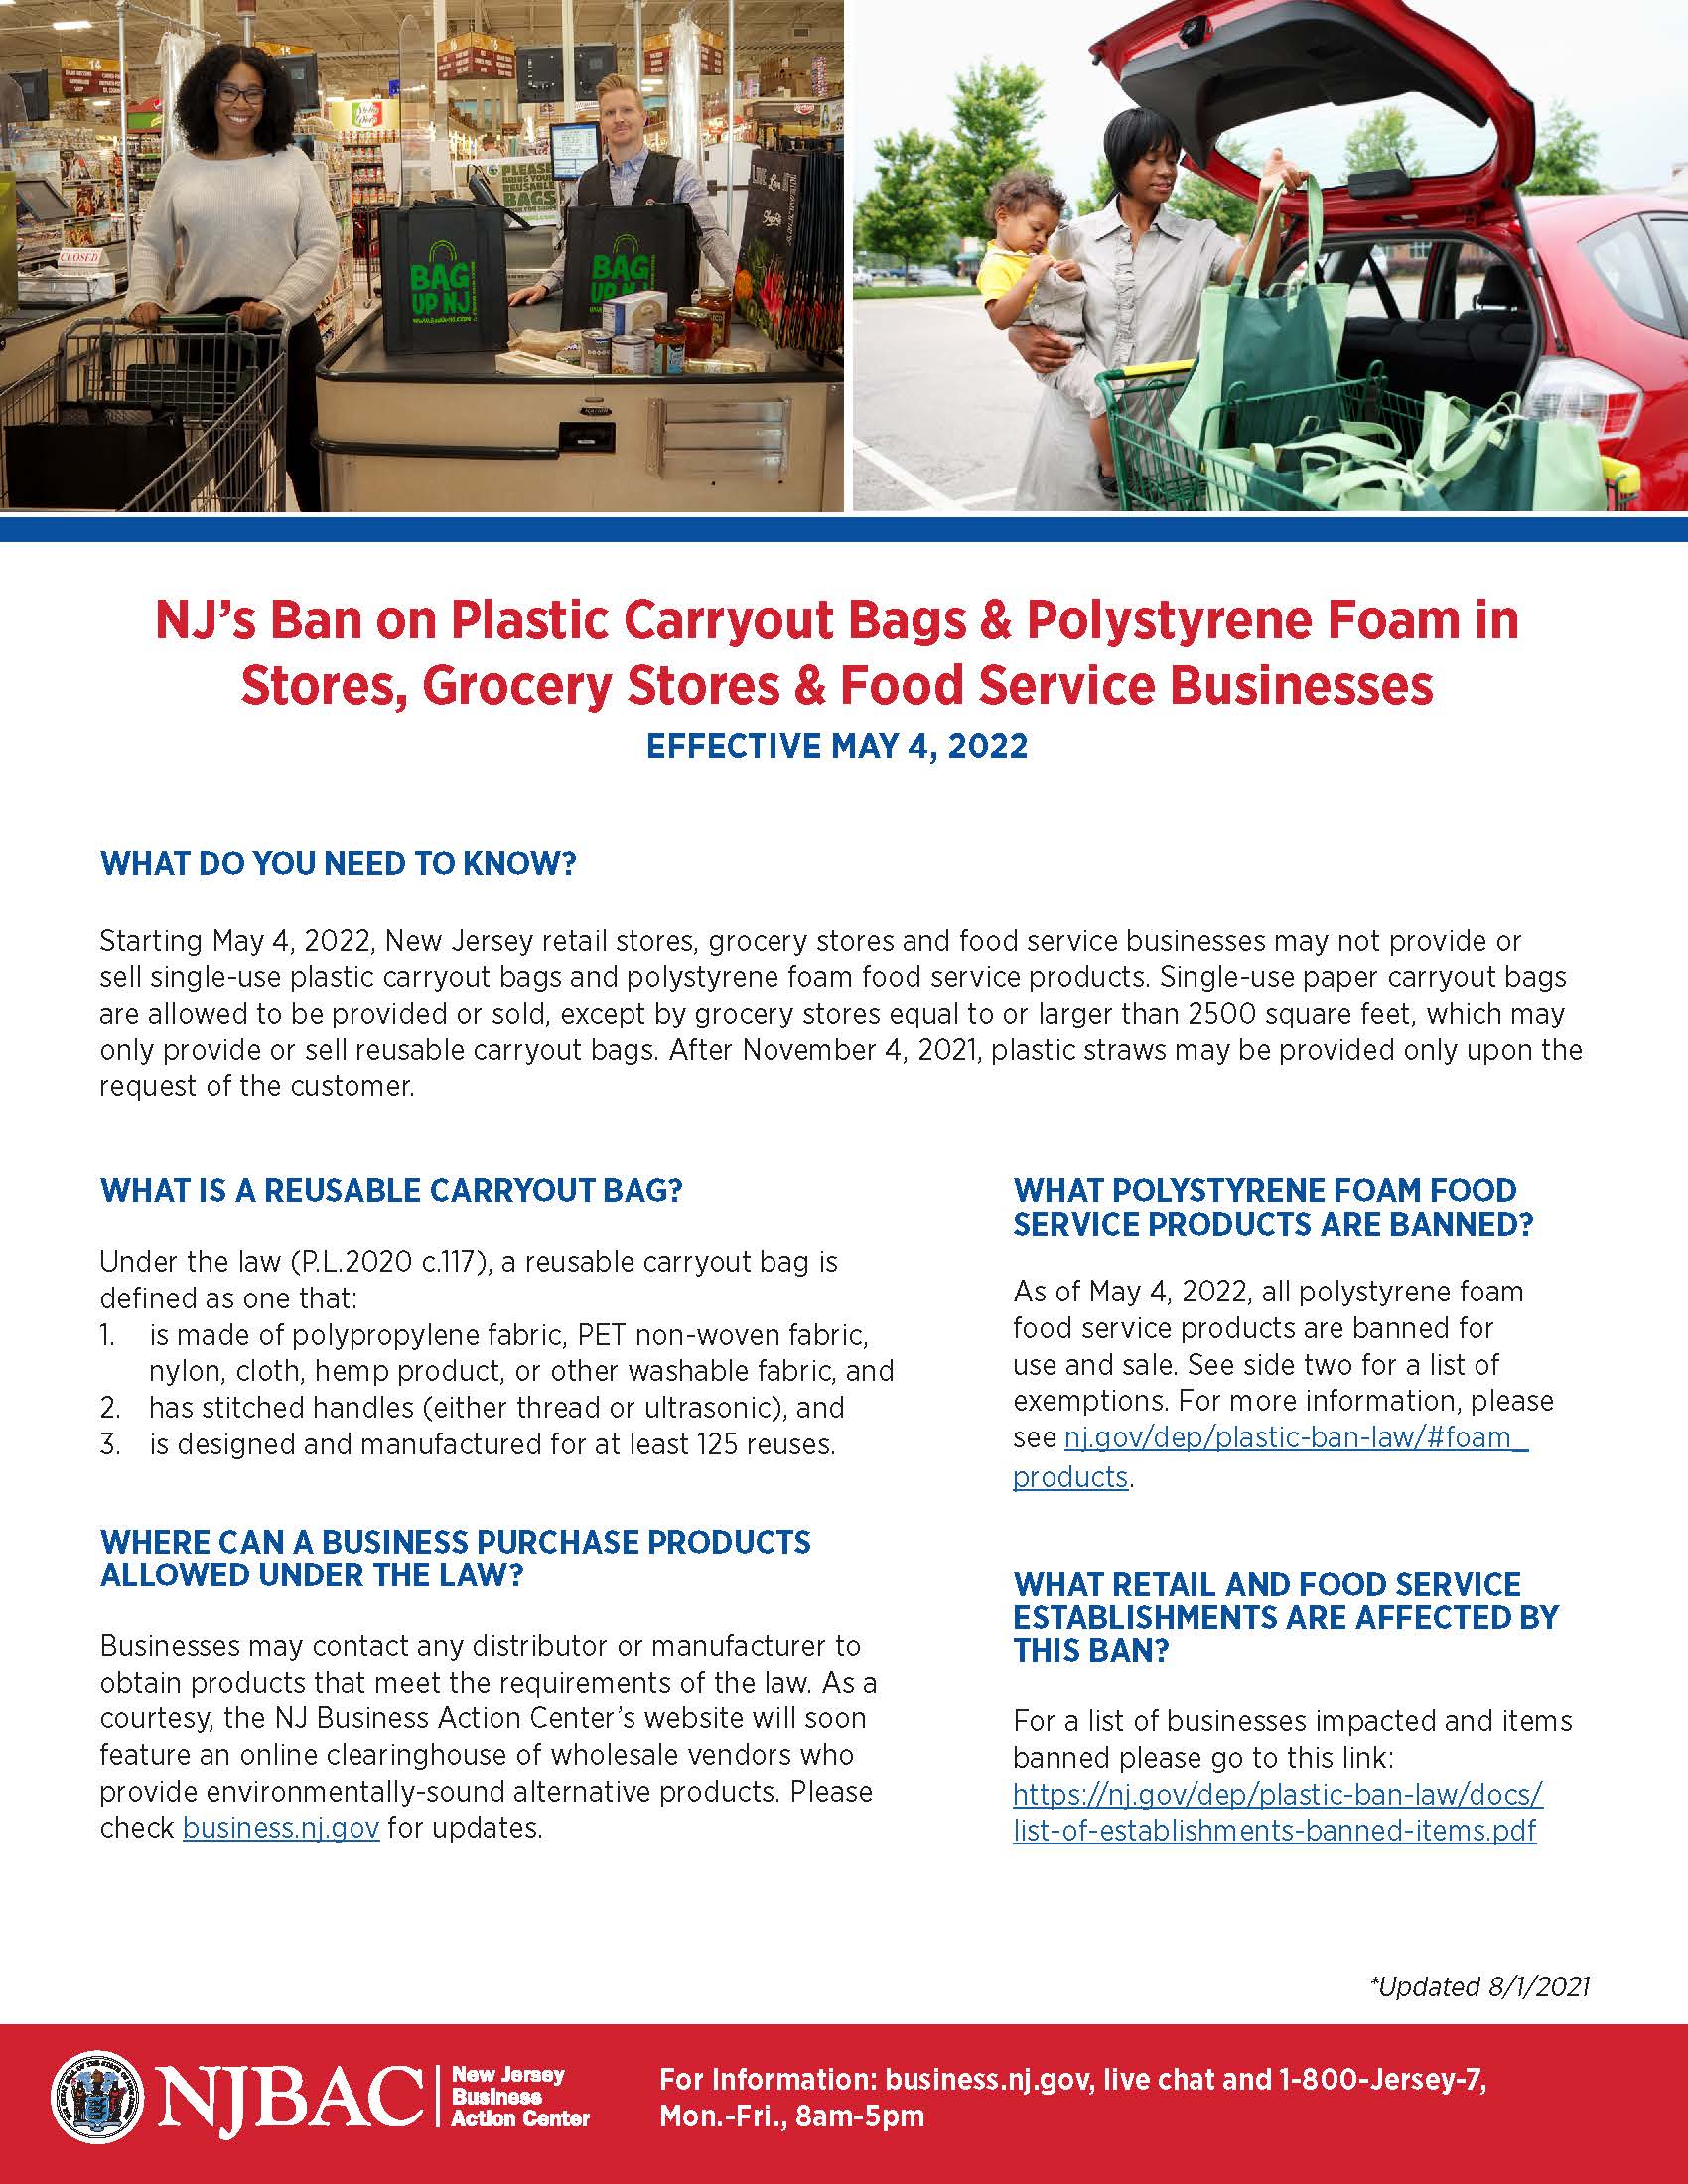 Plastics Ban Law Flyer (07.28.21)_Page_1